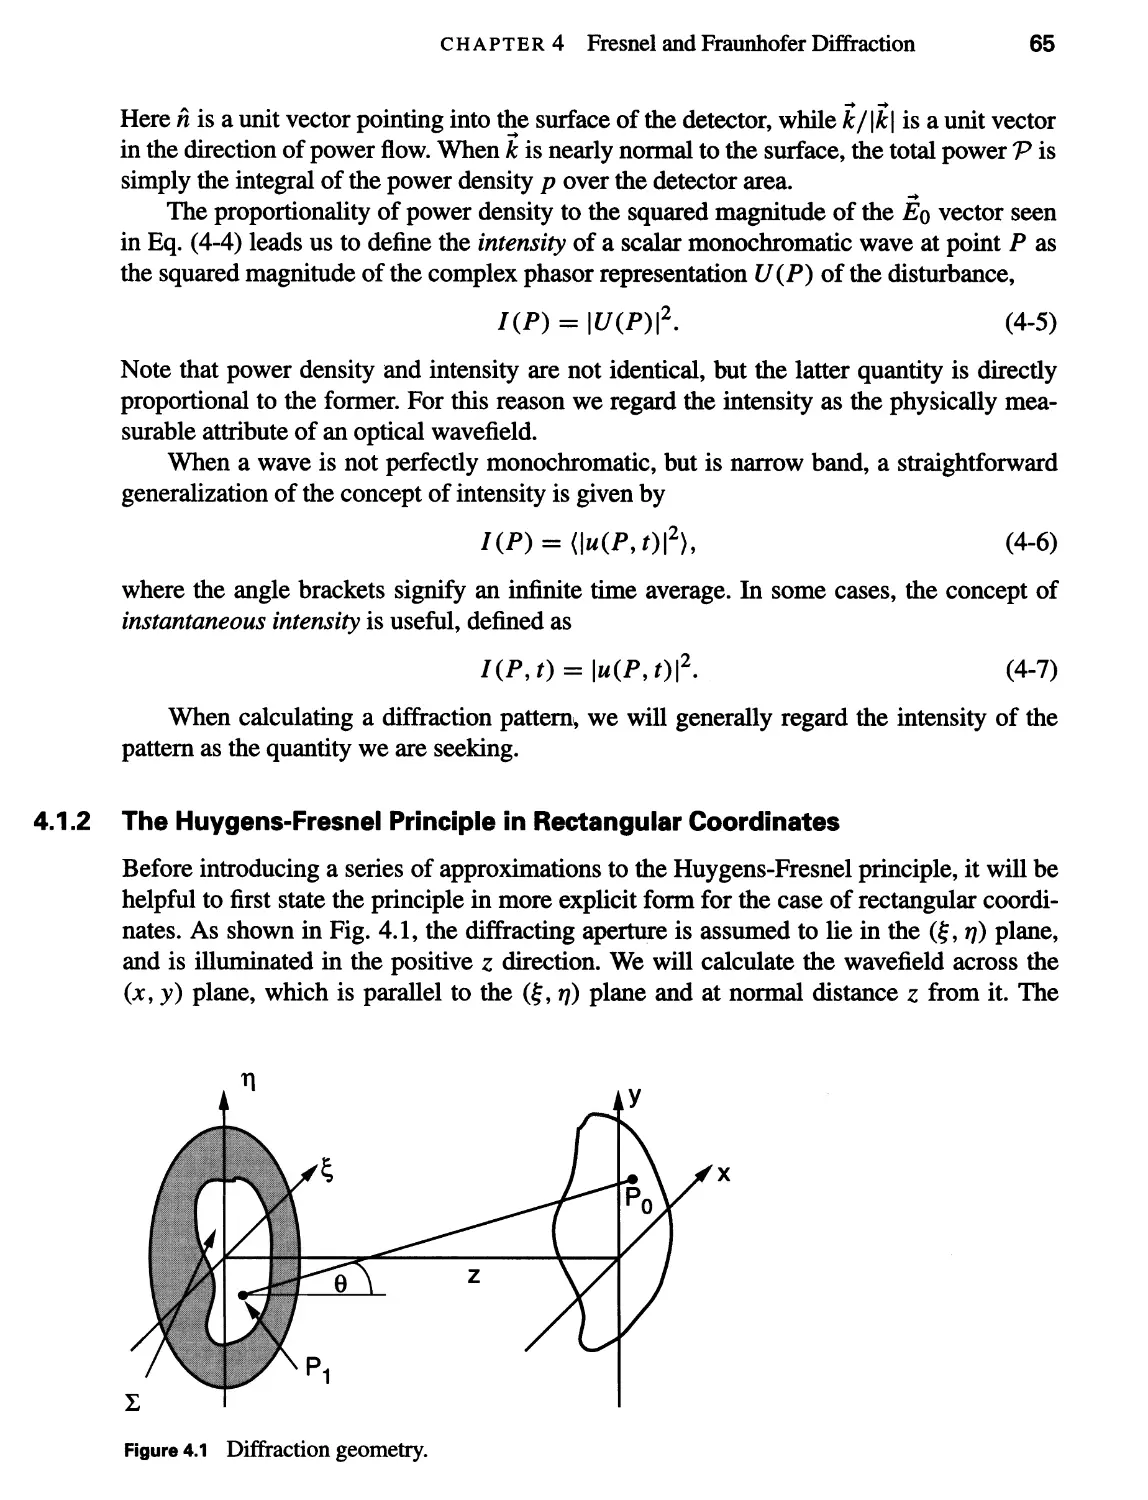 4.1.2 The Huygens-Fresnel Principle in Rectangular Coordinates 65